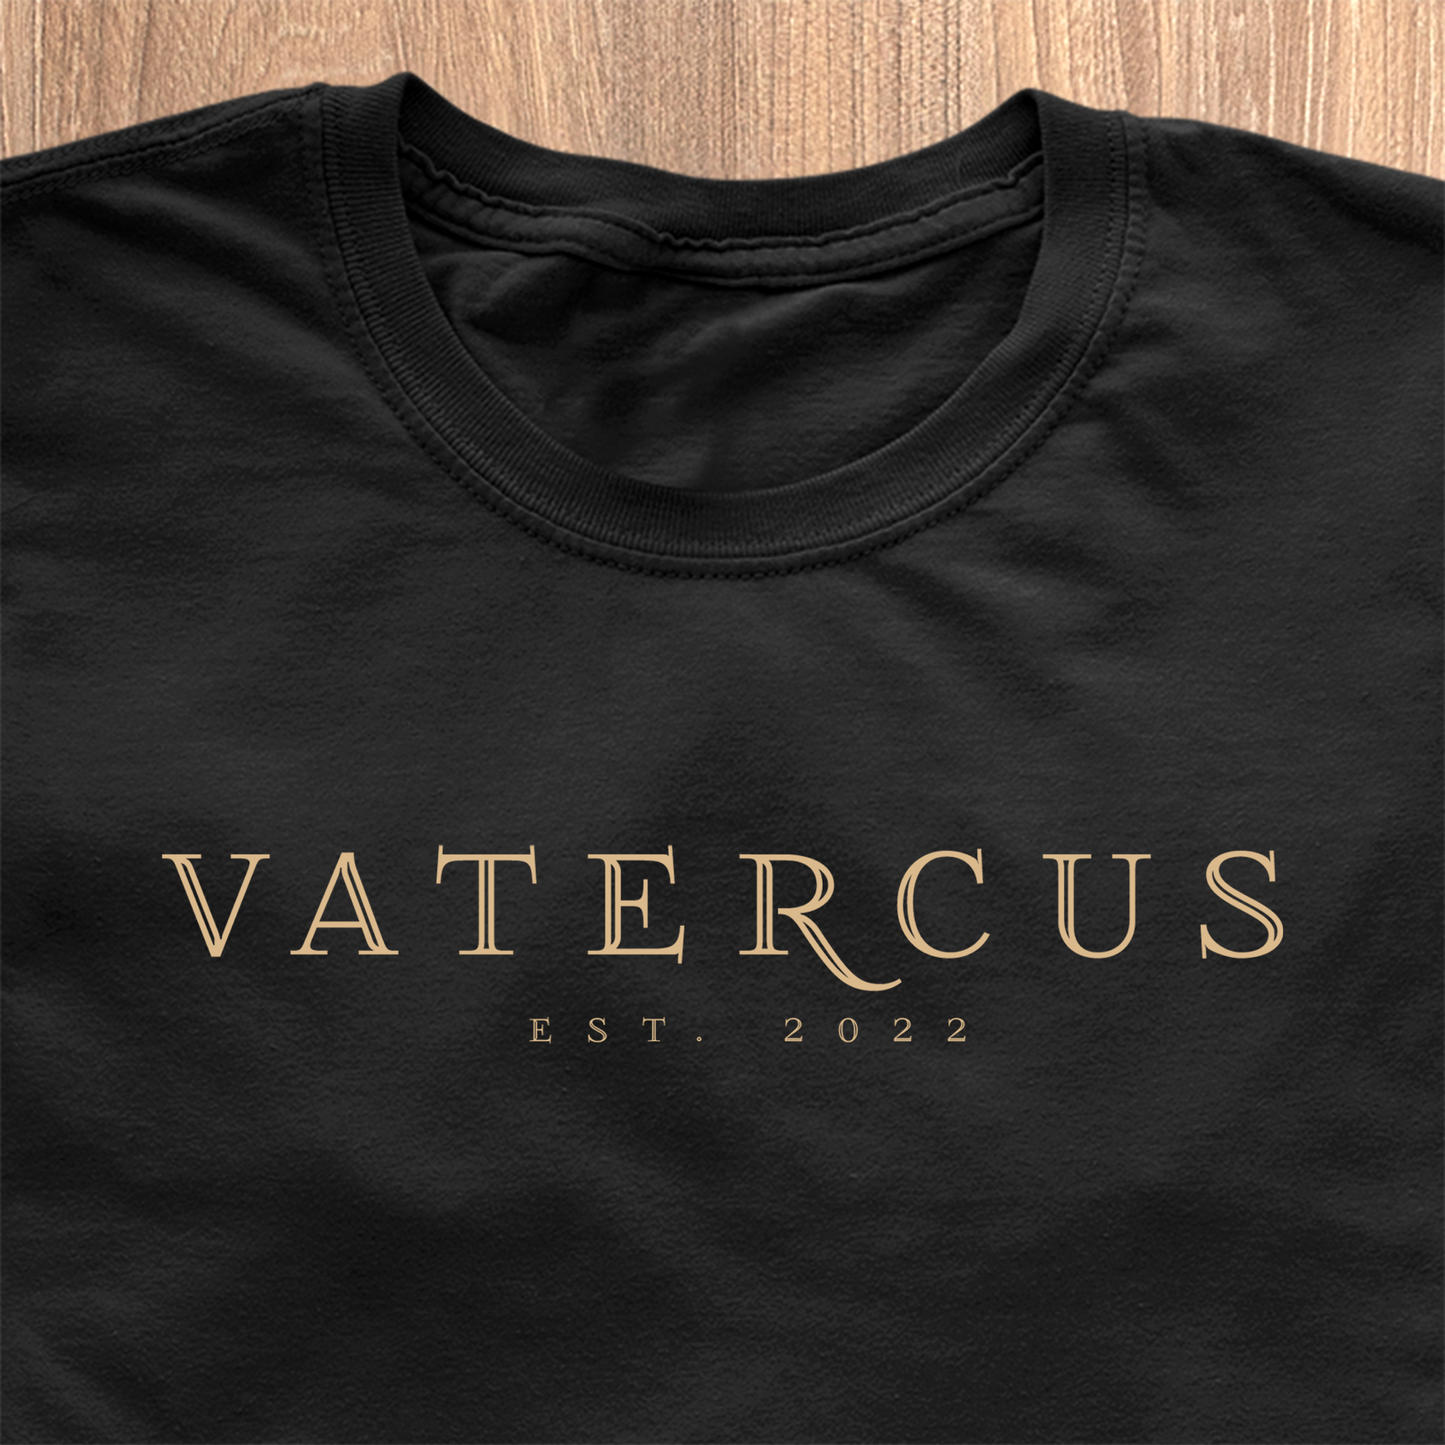 Vatercus T-Shirt - date personalisable